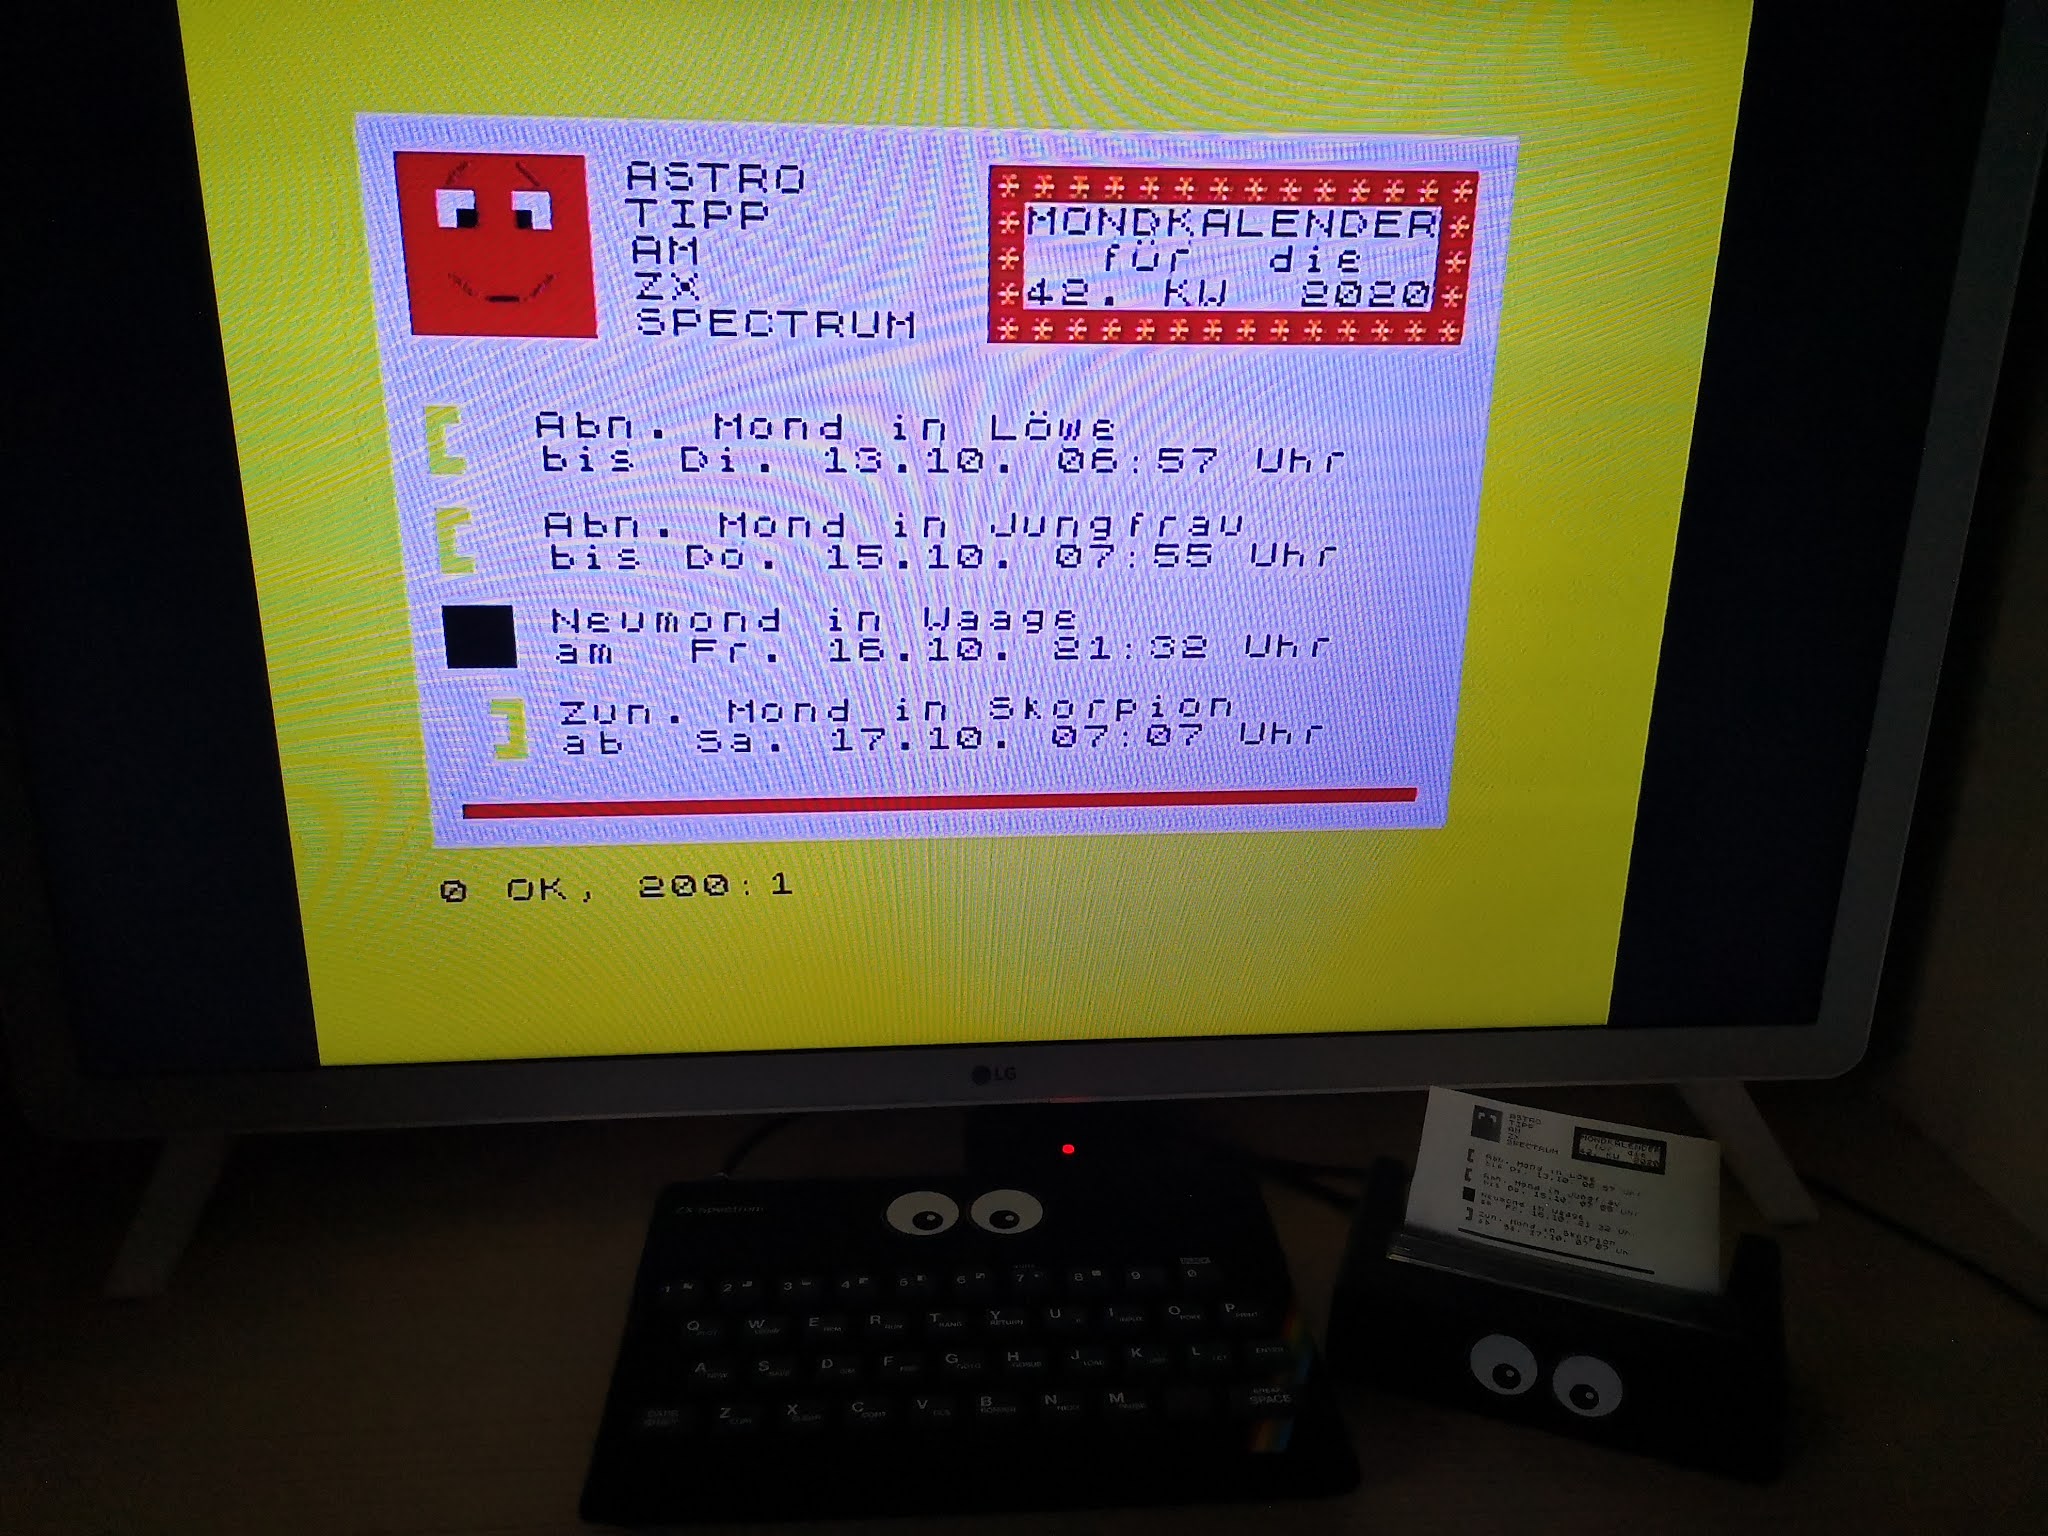 Mondkalender dieser Kalenderwoche am ZX Spectrum